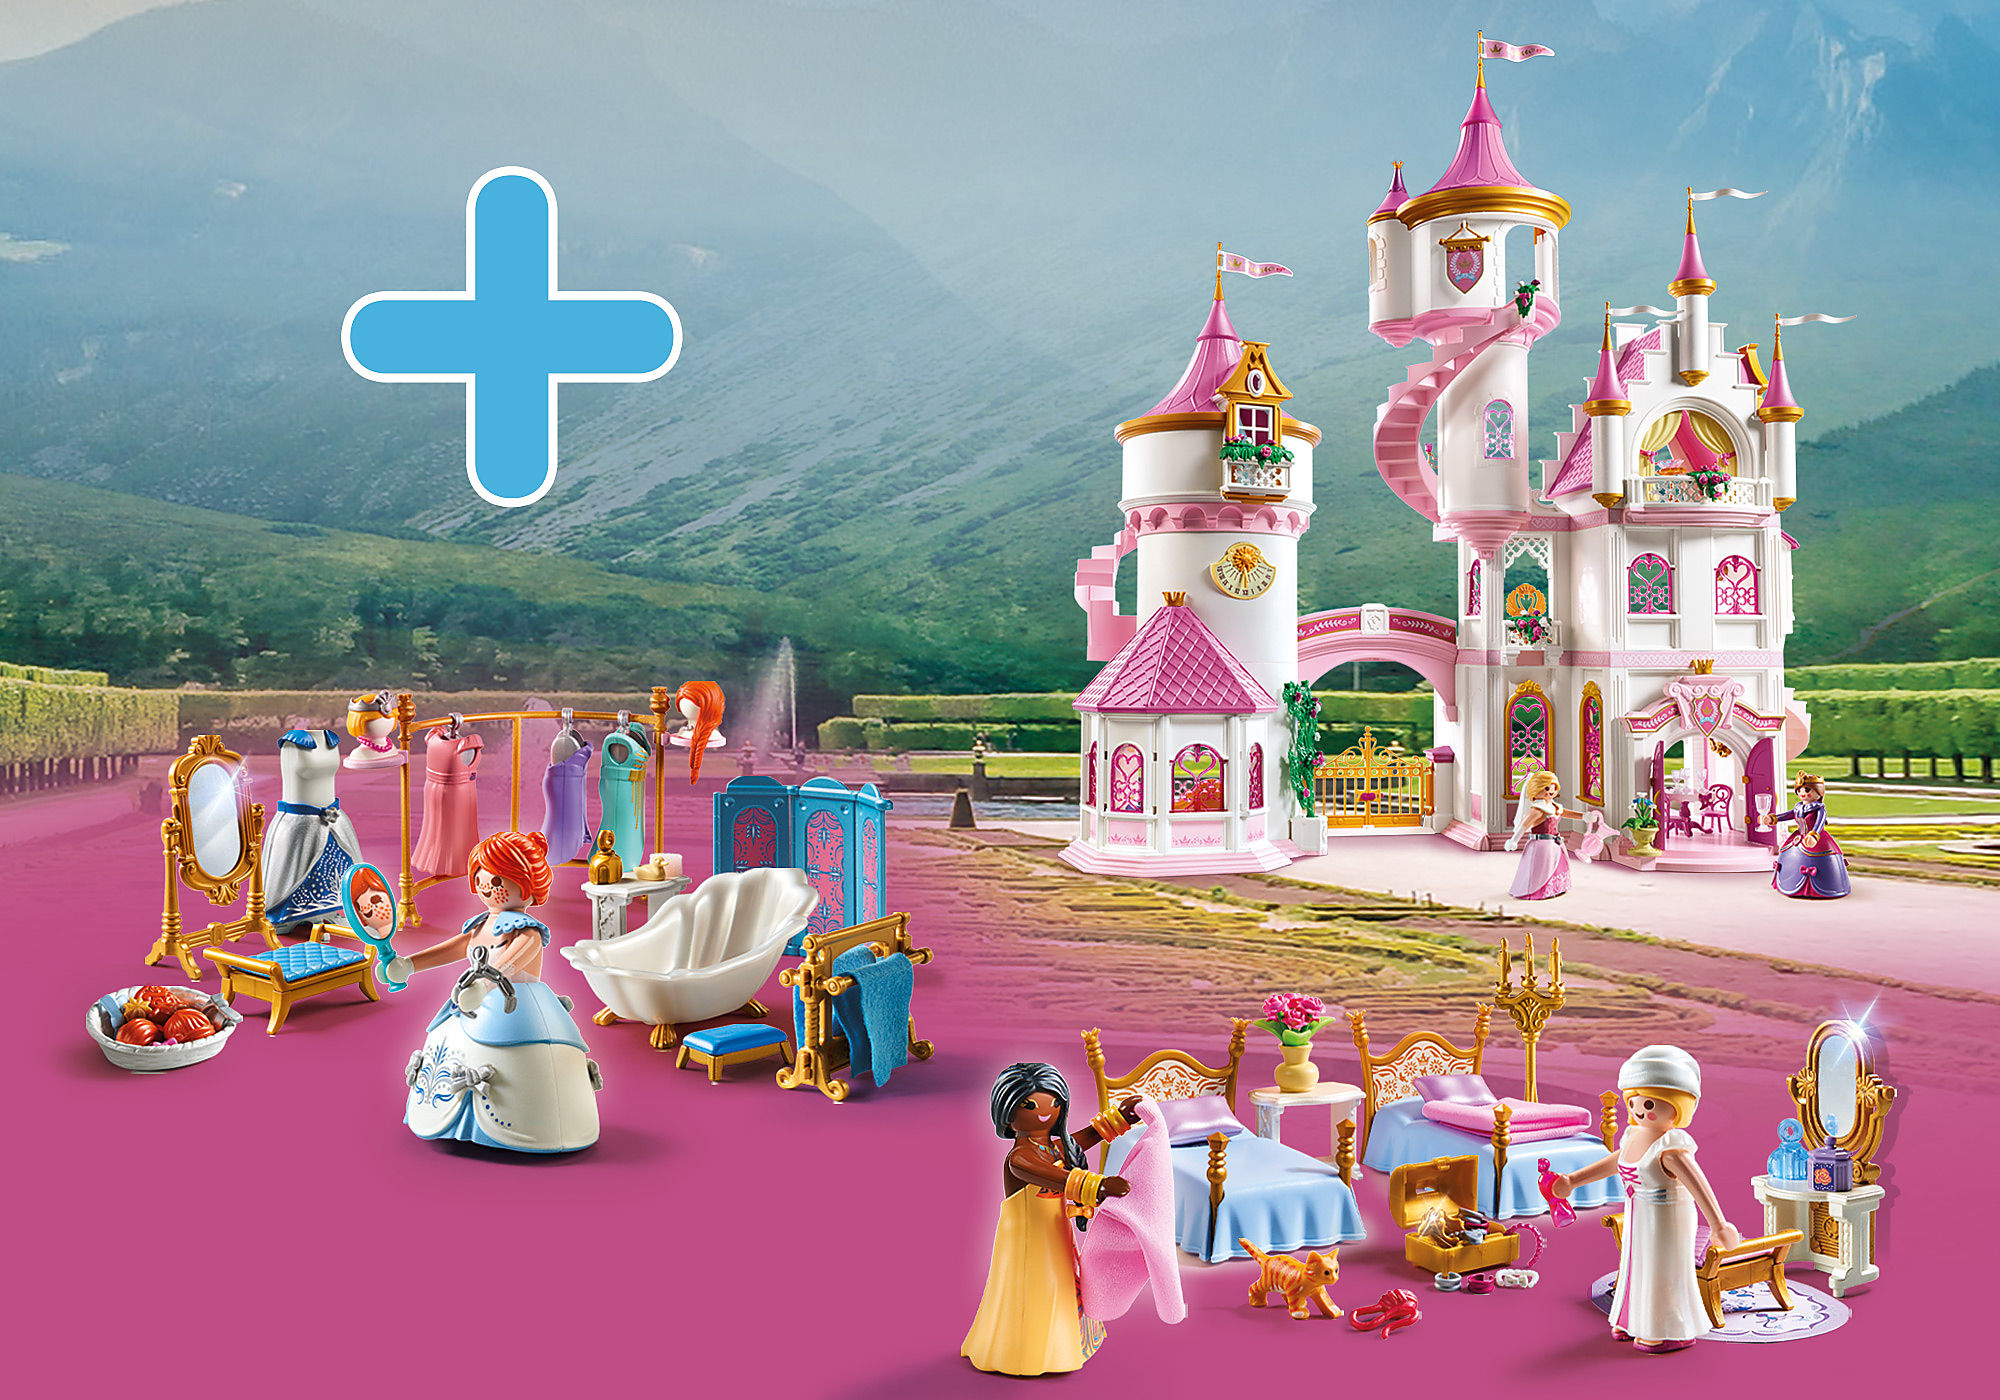 Playmobil Large Princess Castle - Dollhouse 